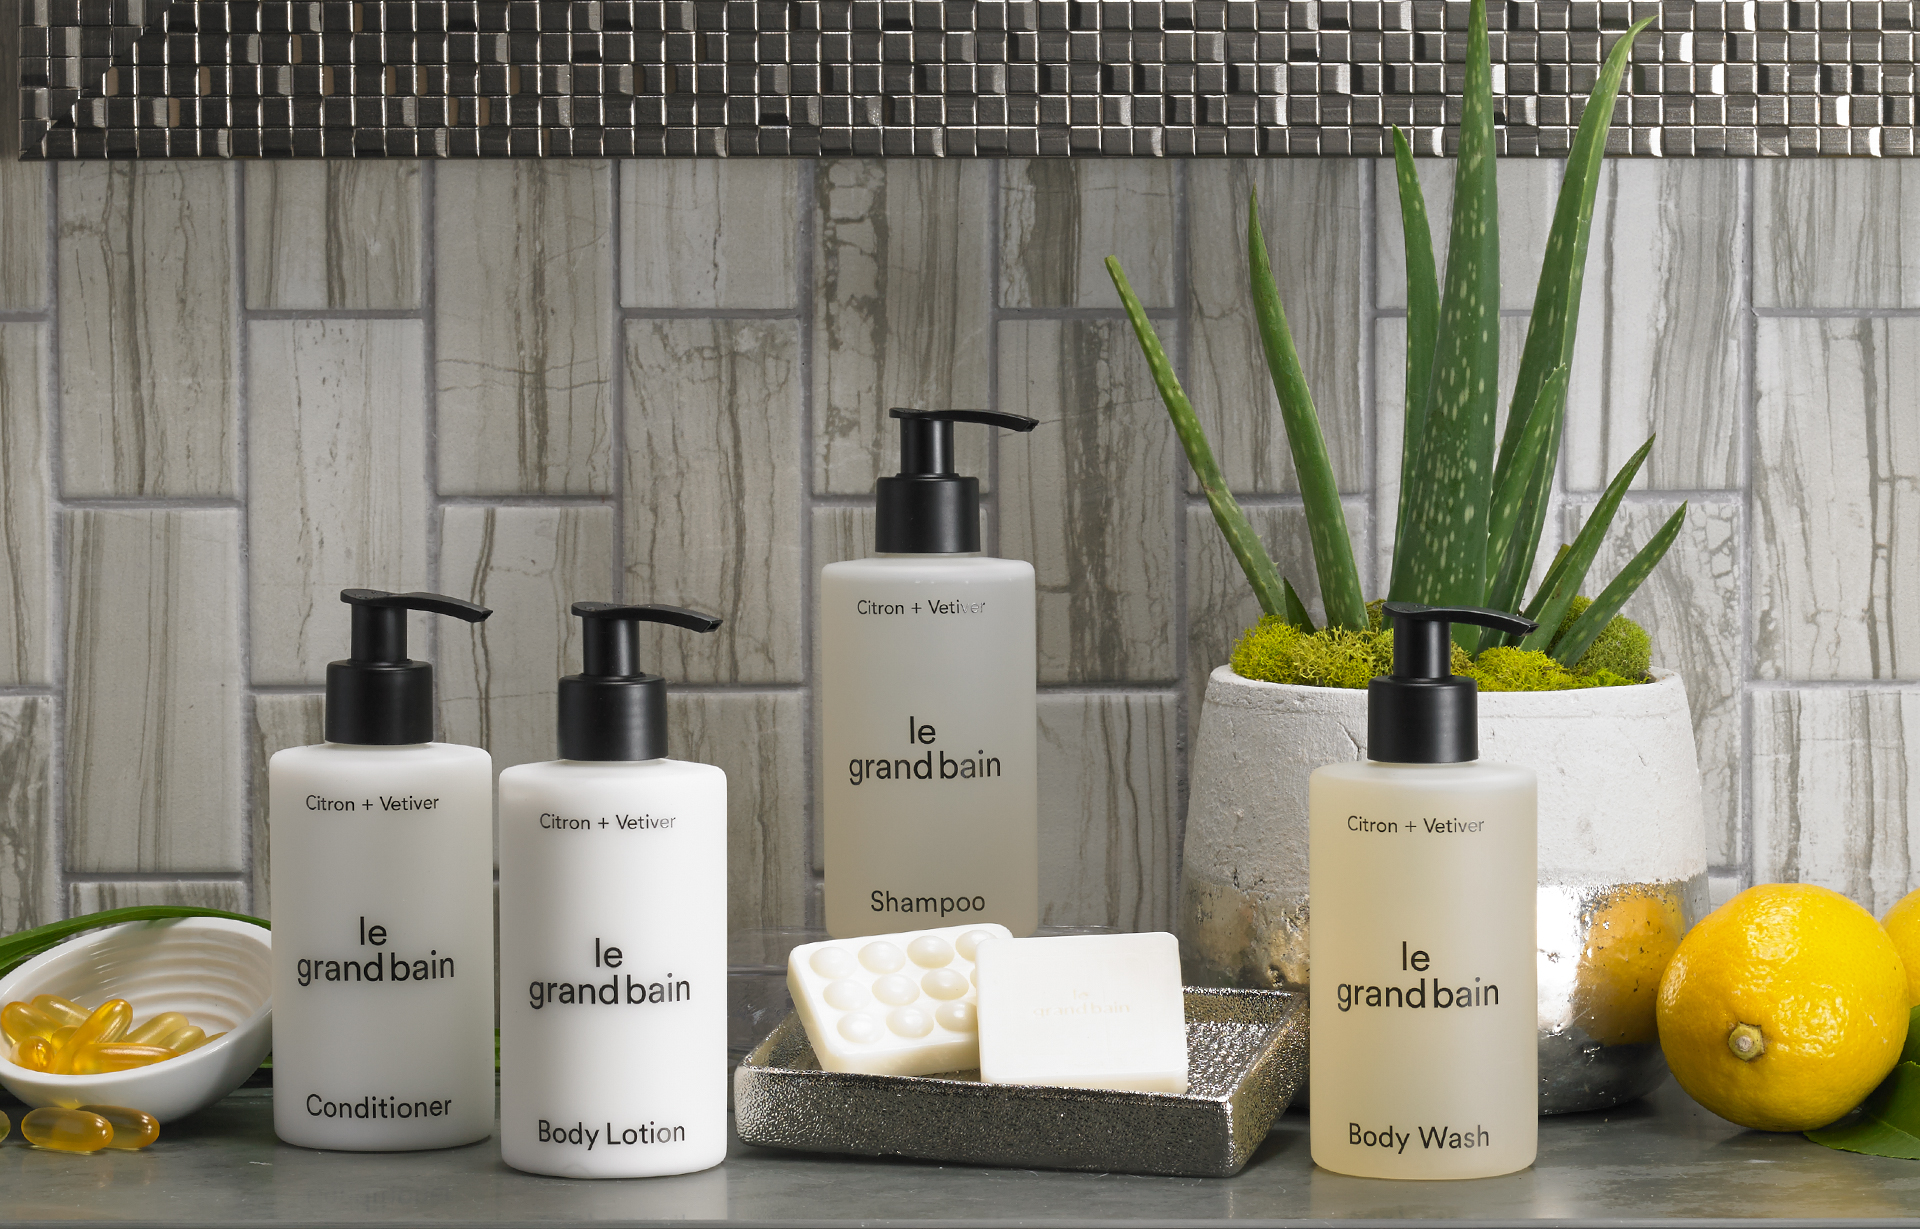 https://www.boutiques.marriottbonvoy.com/wp-content/uploads/2019/10/sheraton-bath-le-grand-bain-amenities-collection-hero-shop.jpg